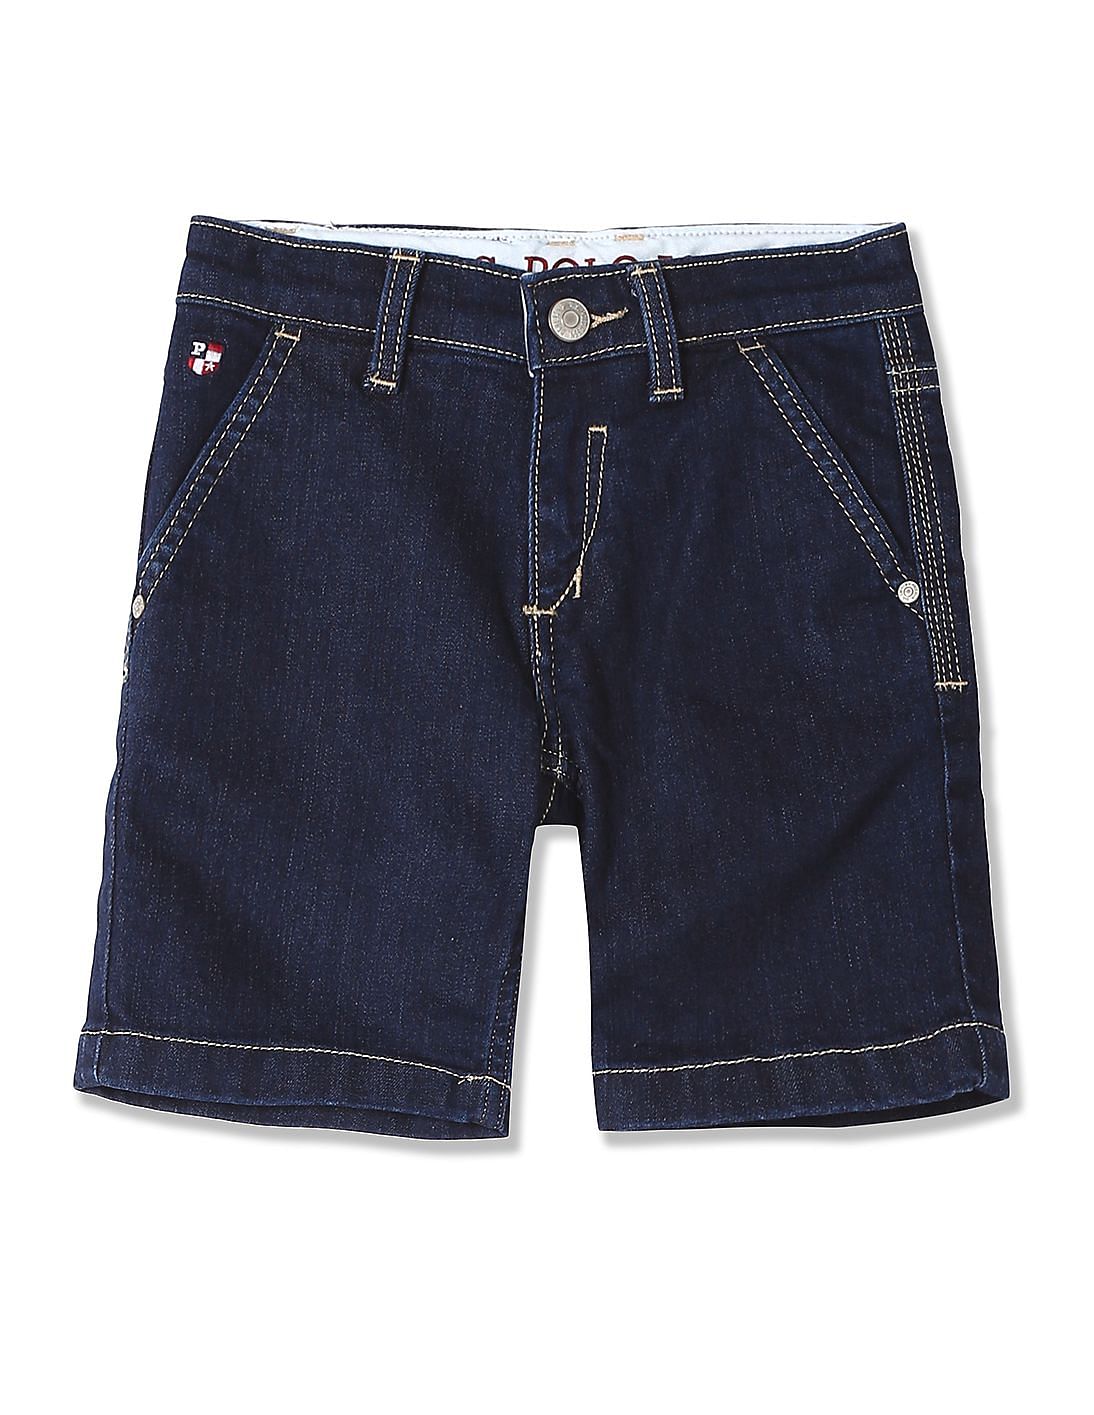 Buy U.S. Polo Assn. Kids Boys Dark Wash Denim Shorts - NNNOW.com